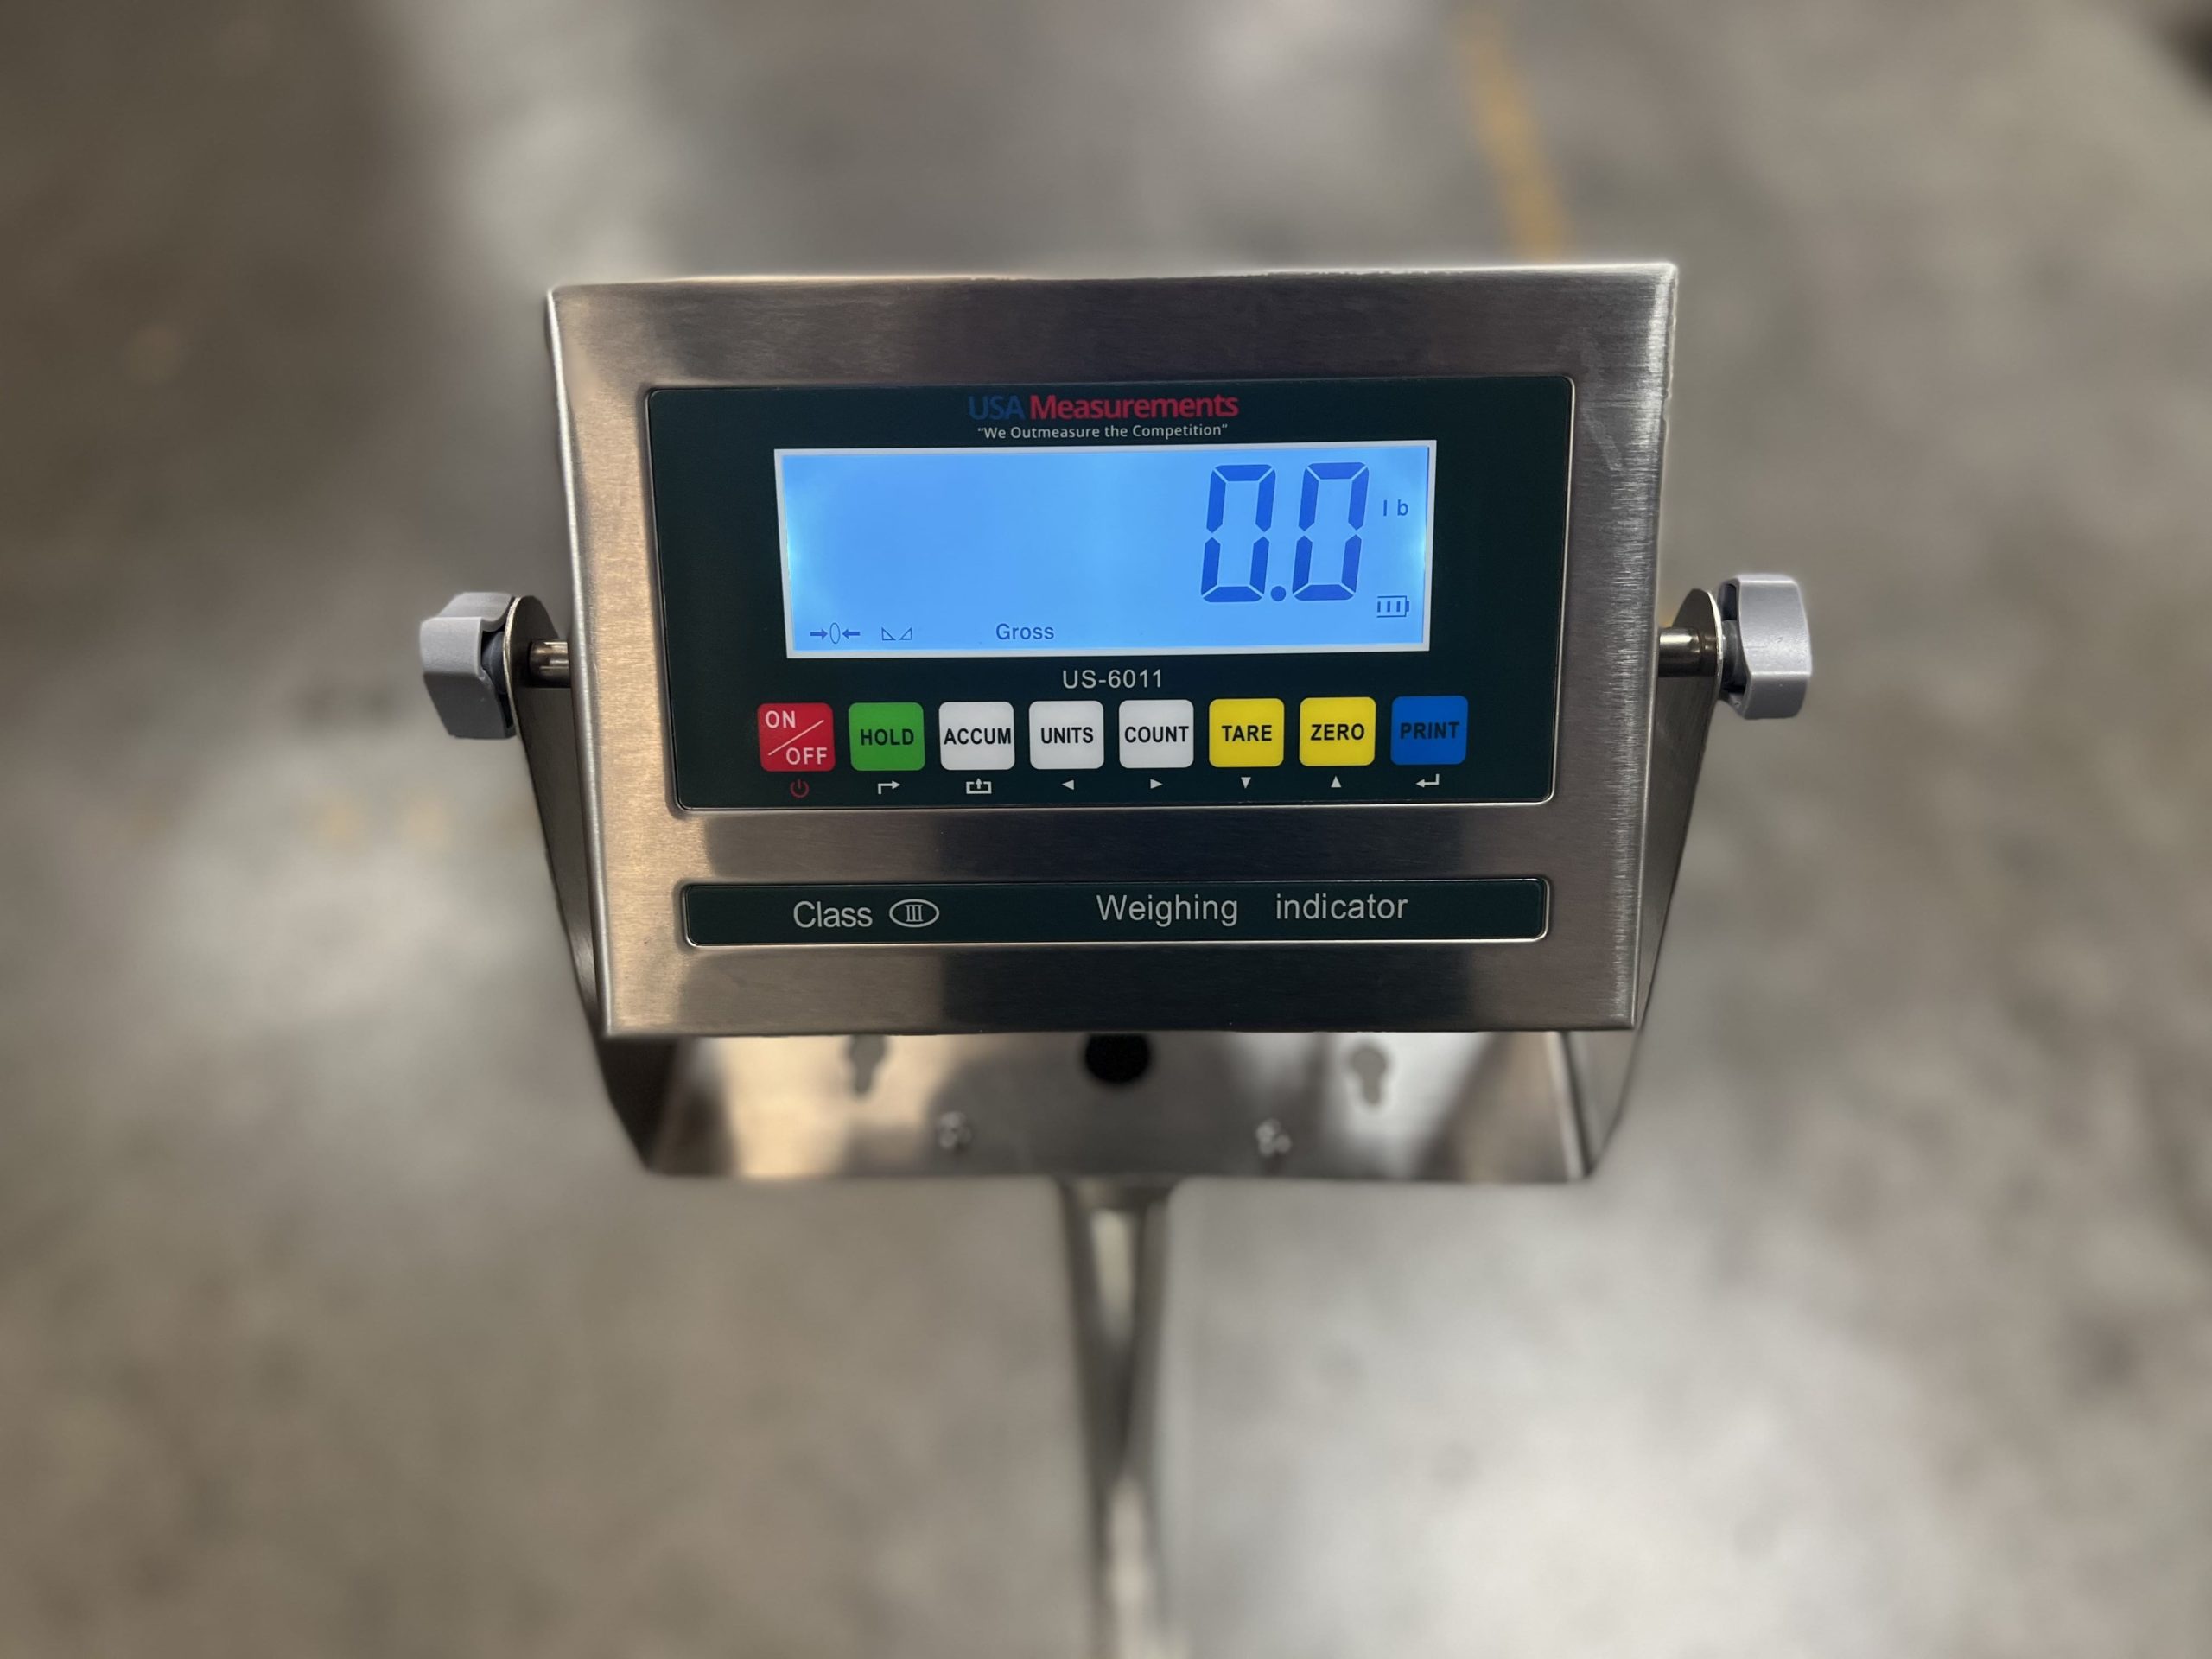 Measuretek 12R965 Platform Counting Bench Scale, LCD